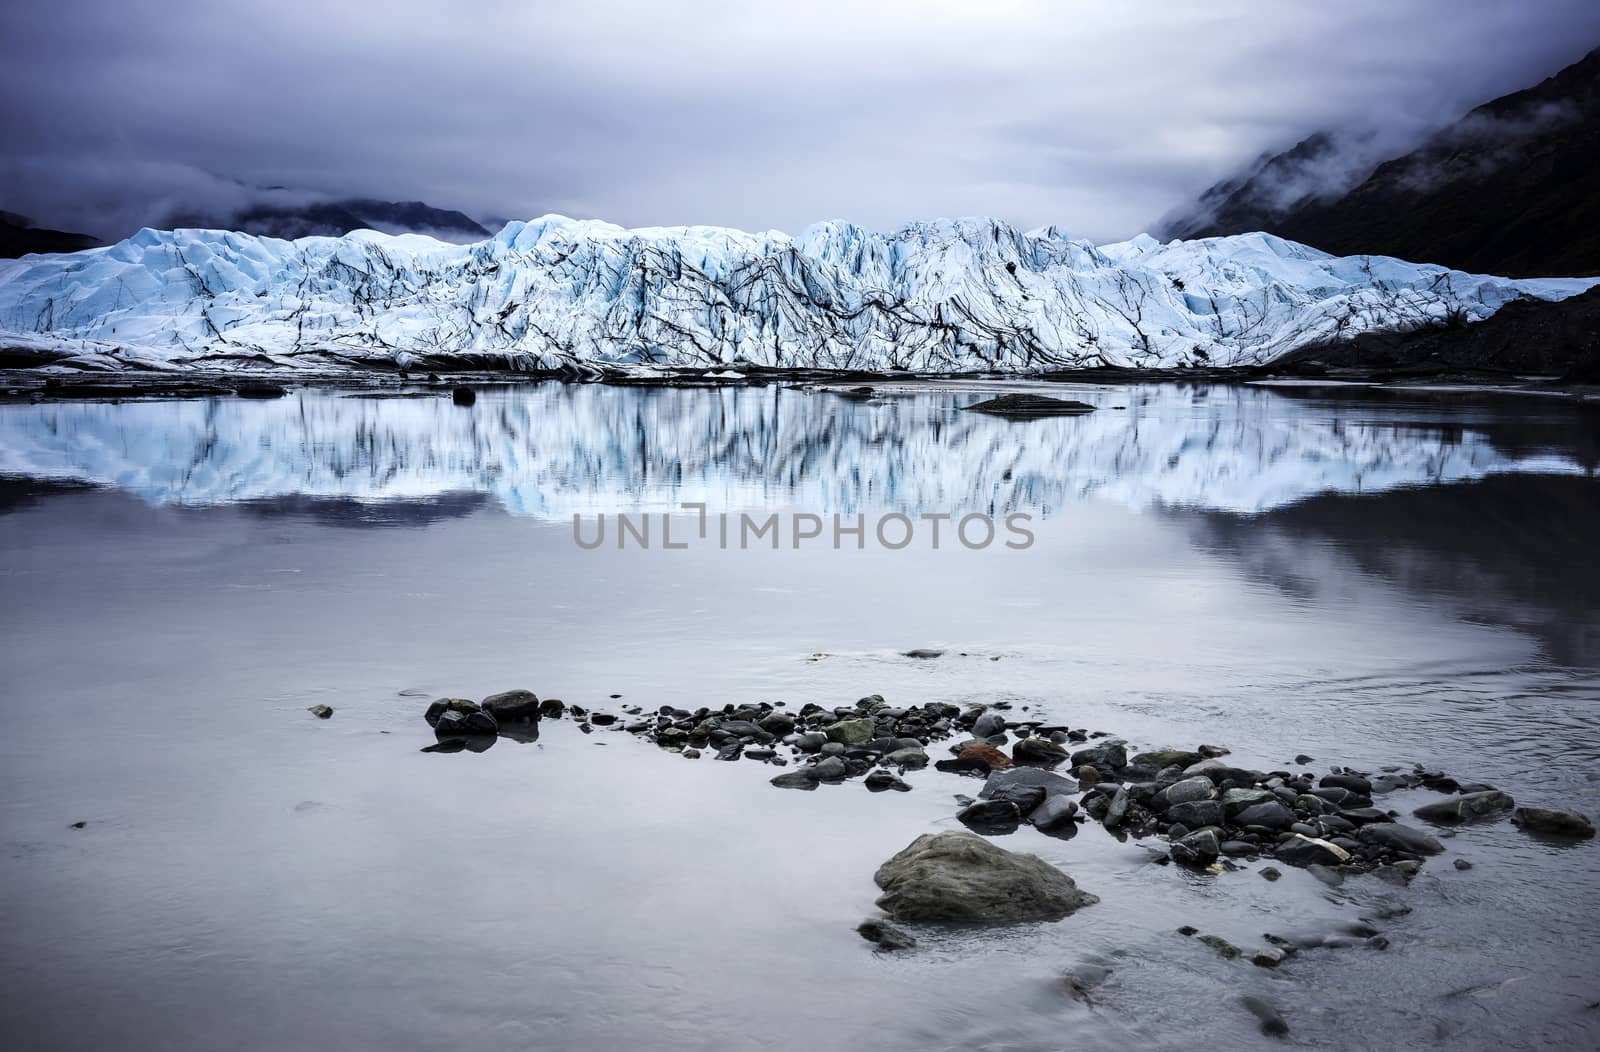 Alaska Glacier Reflection in Water by leieng